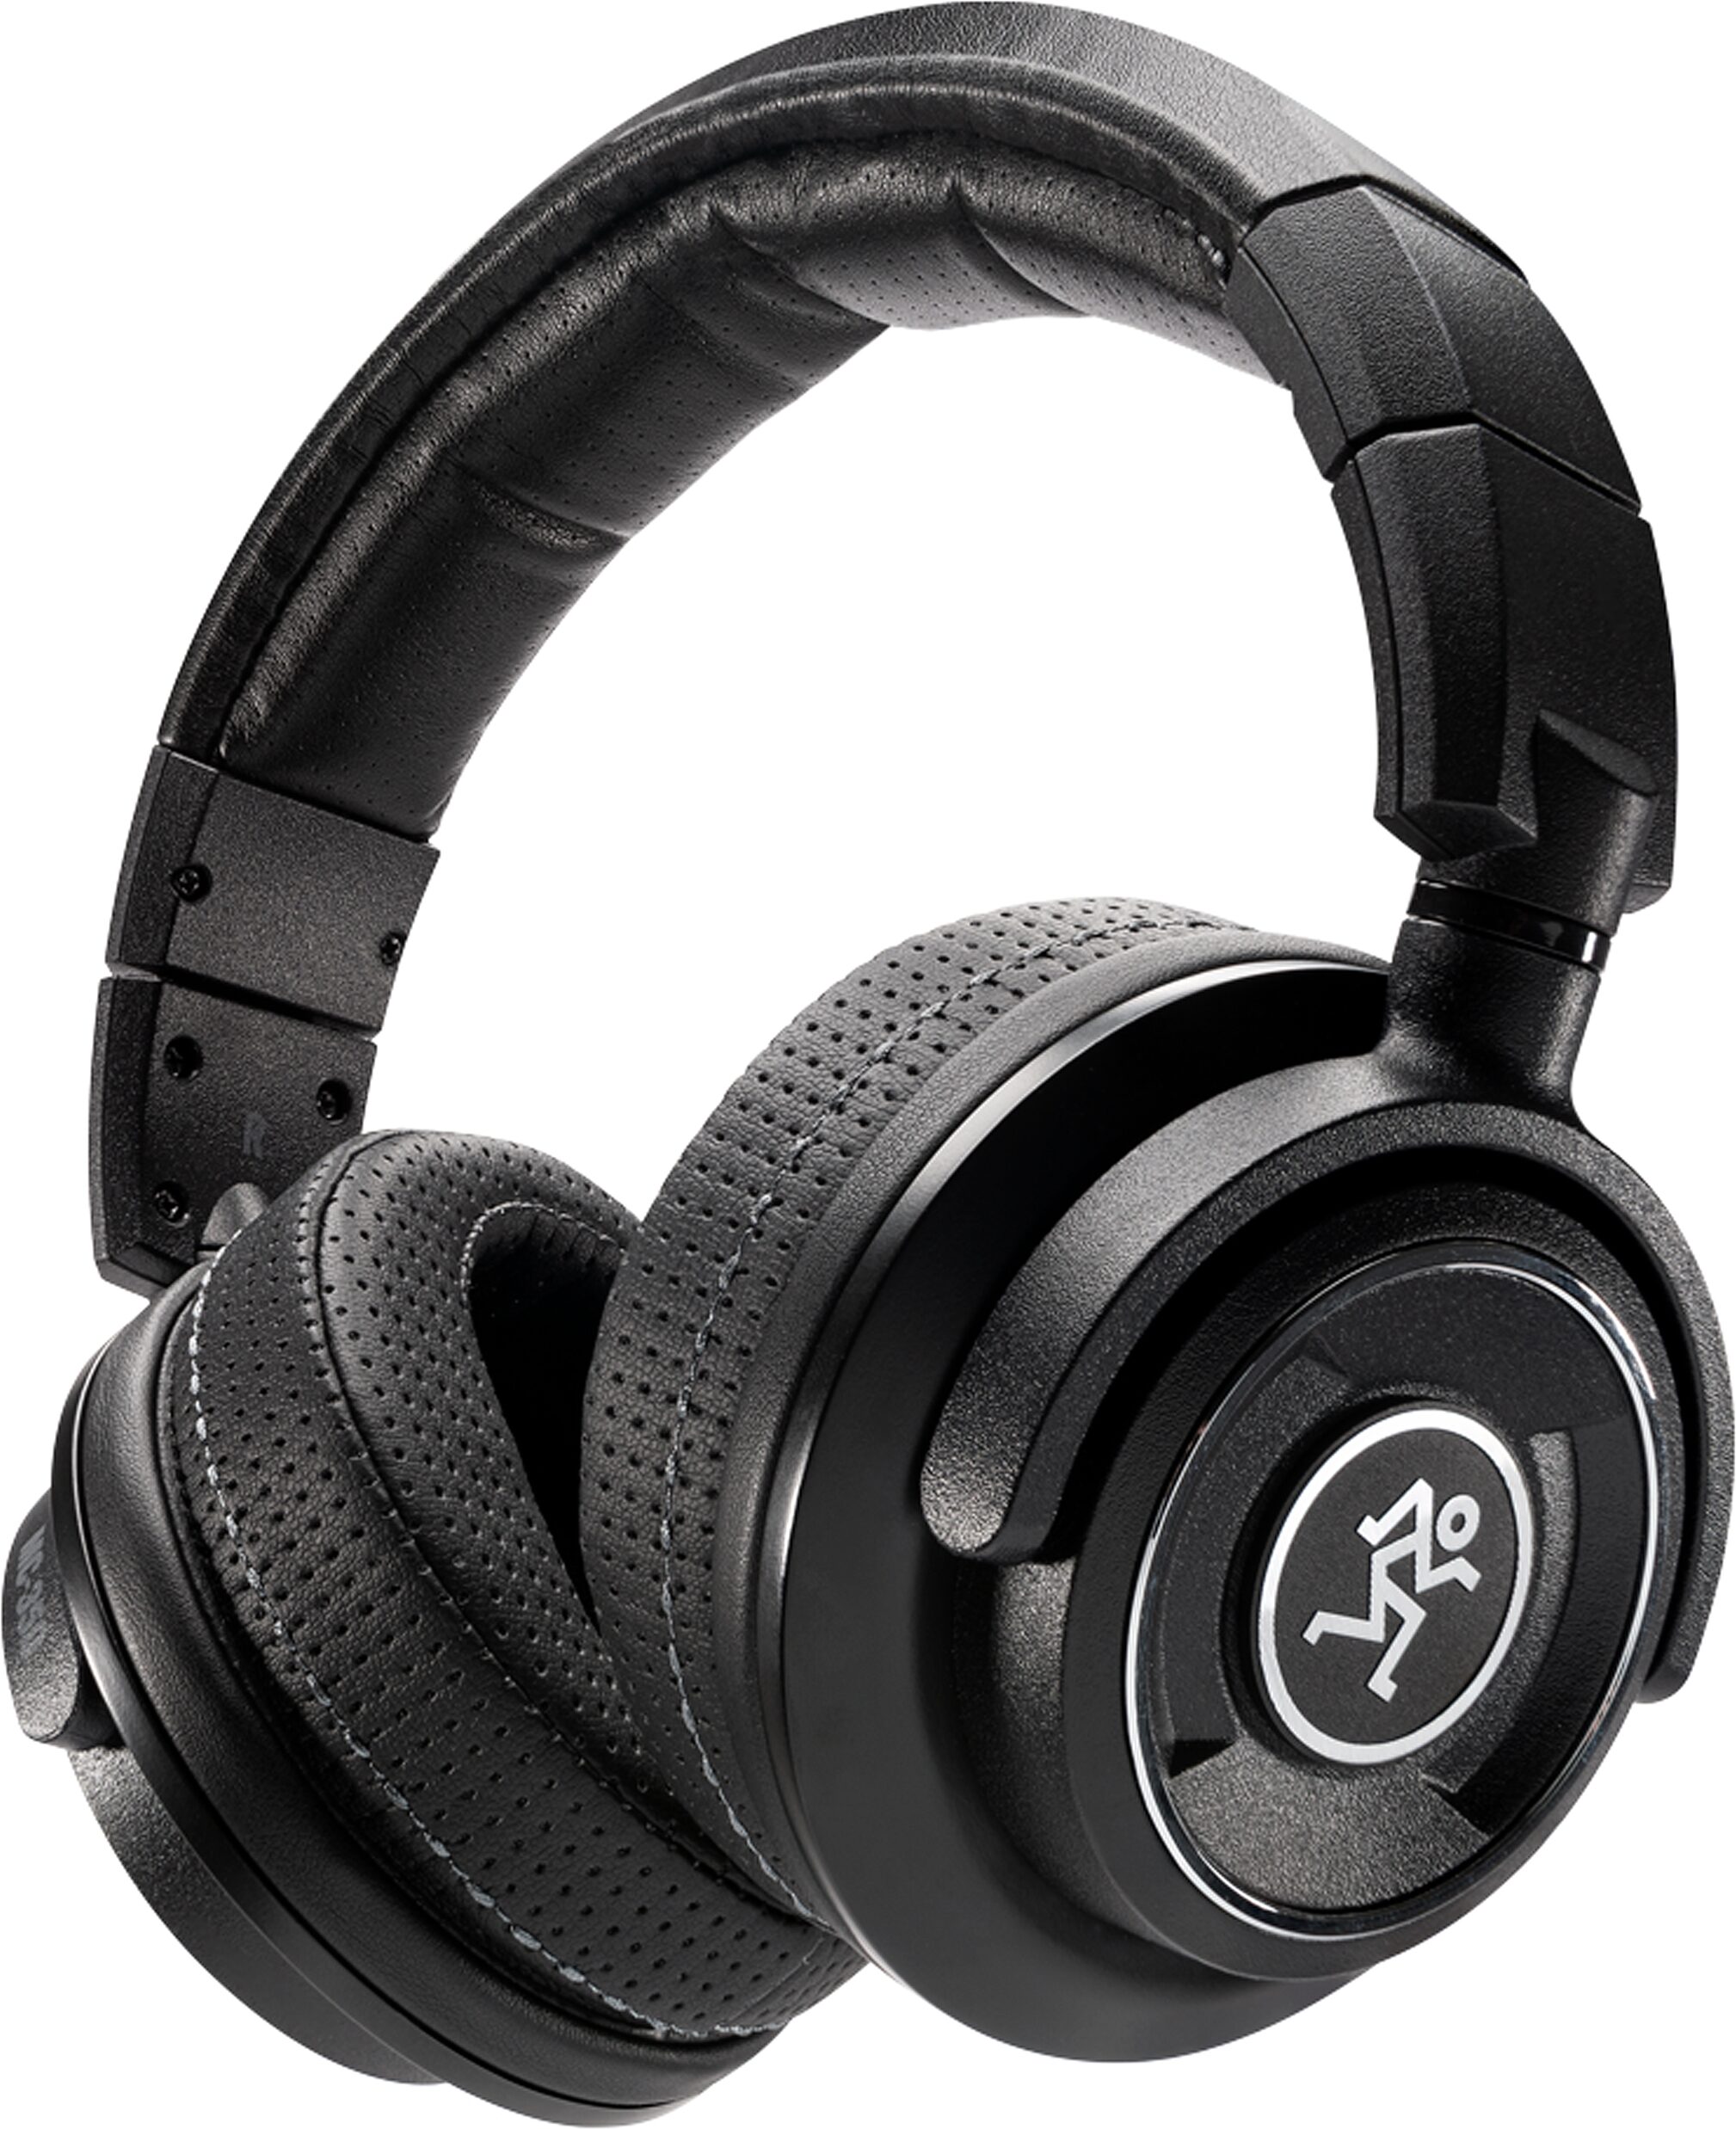 årsag melodisk Arrowhead Mackie MC-350 Professional Closed-Back Headphones | zZounds